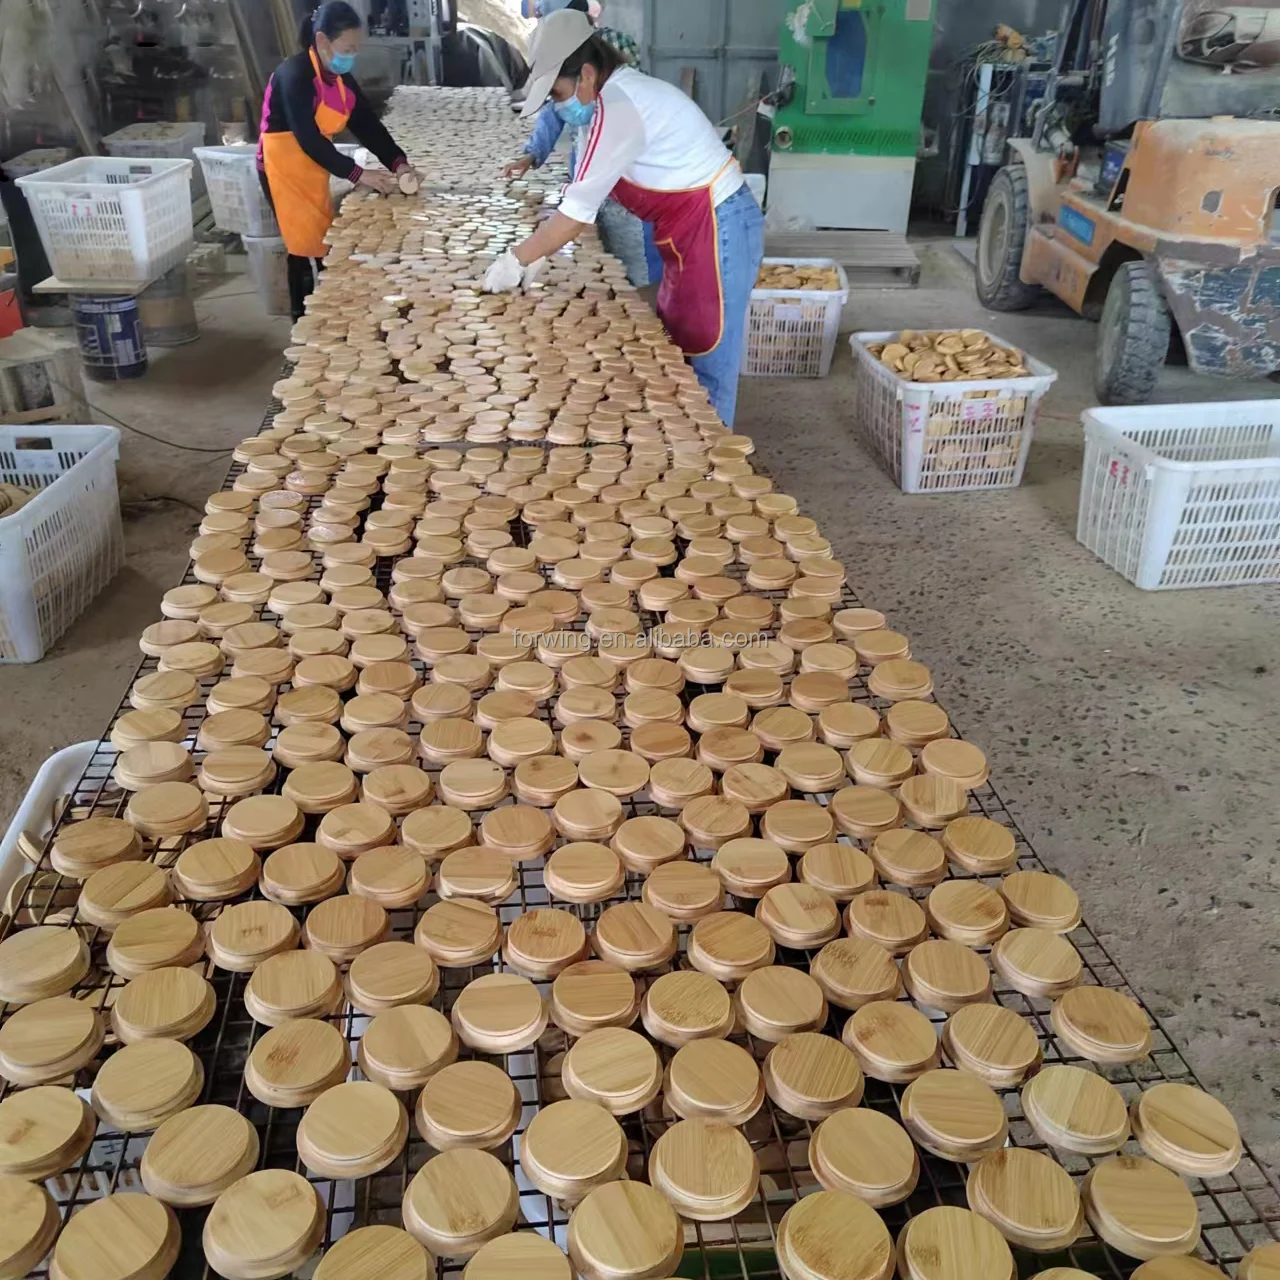 Oui Yogurt Bamboo Jar Lids Set Wooden Lids with Silicone Sealing Rings supplier